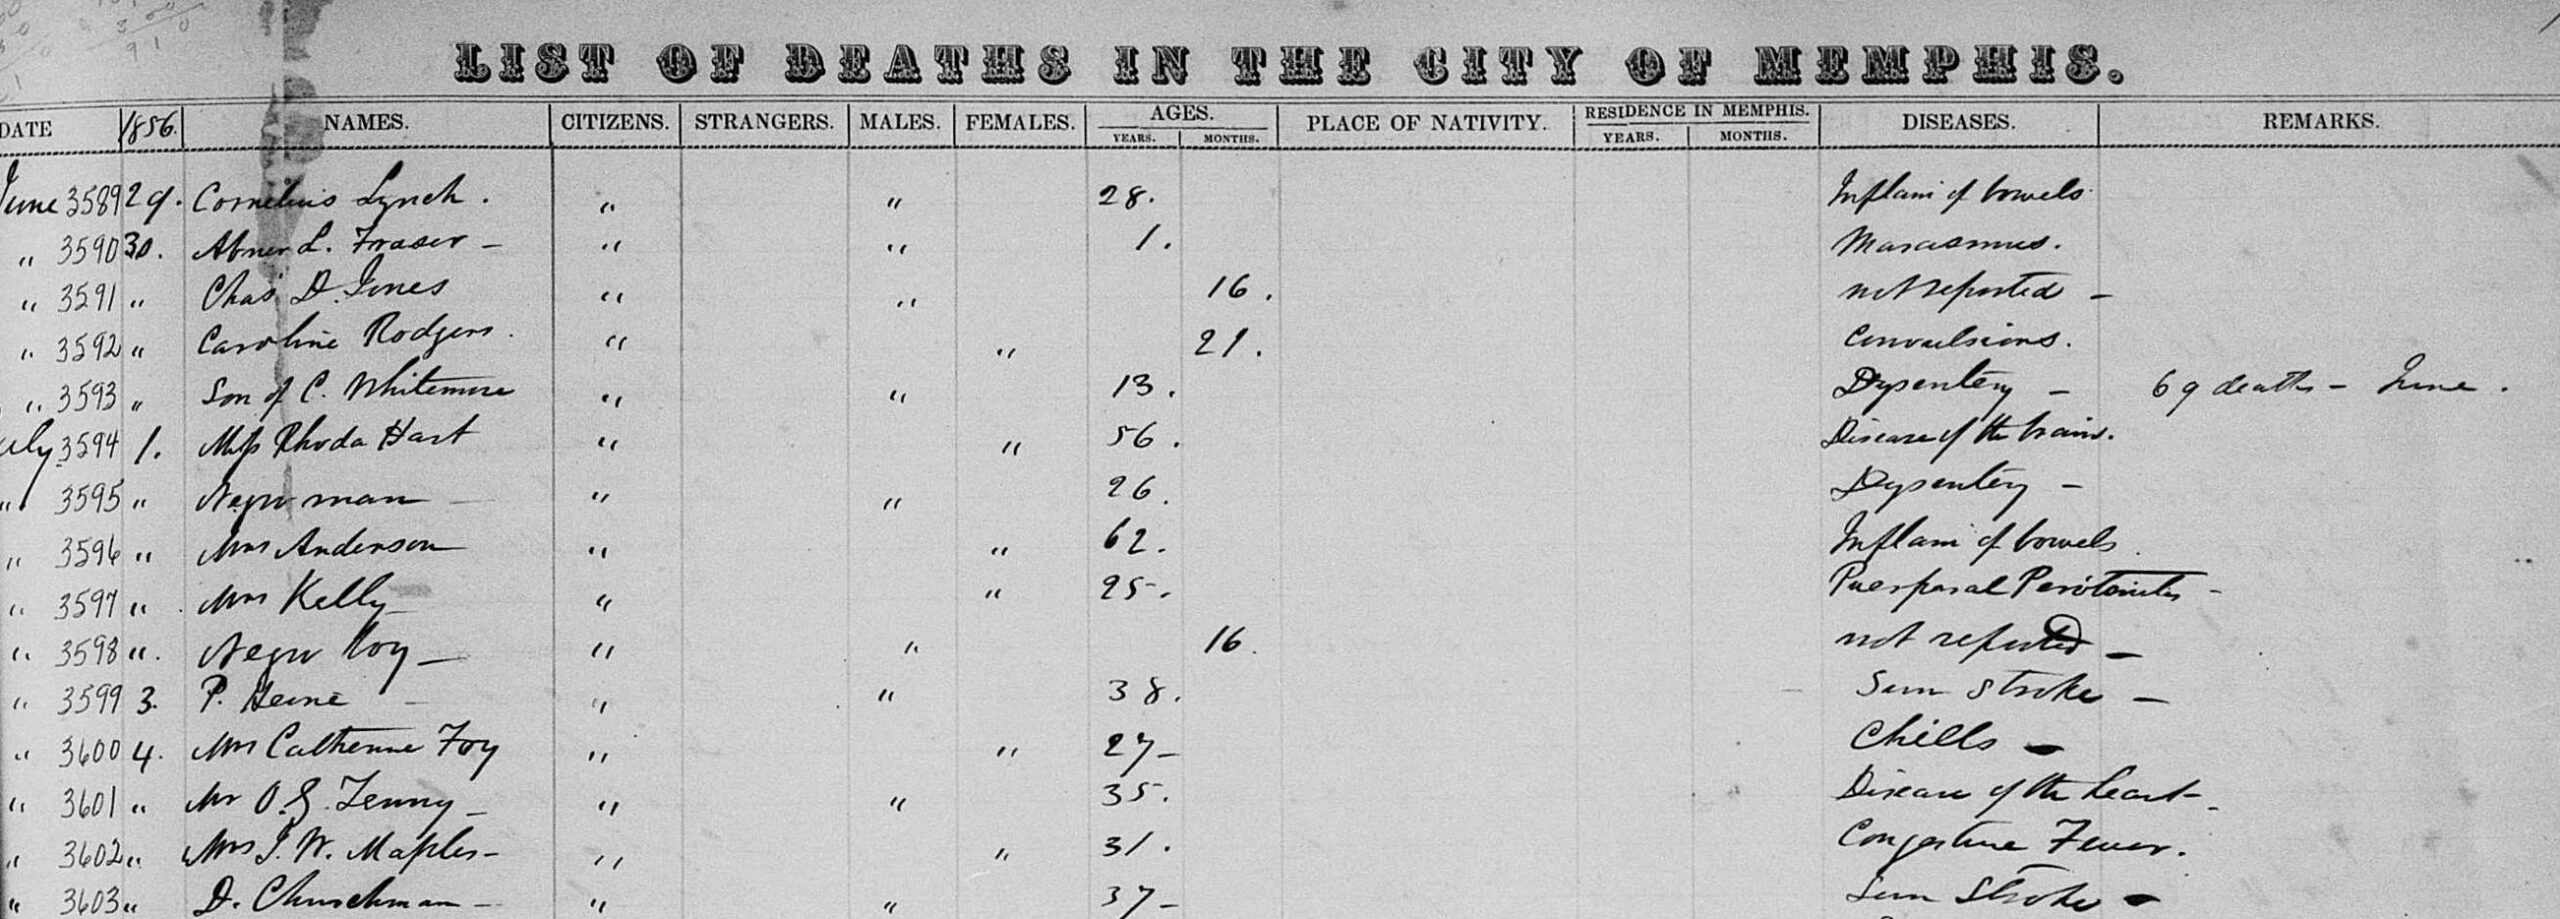 Example, 1856 Death Register